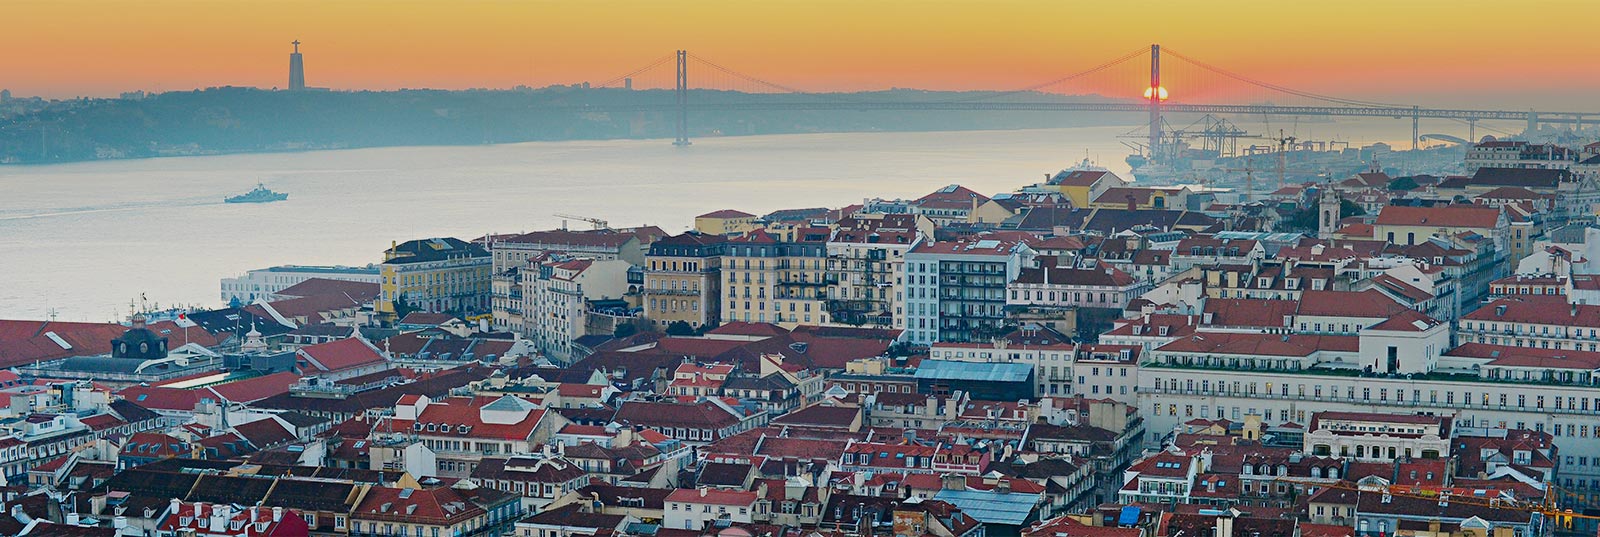 Lisbon Lisbon Tourism And Travel Guide